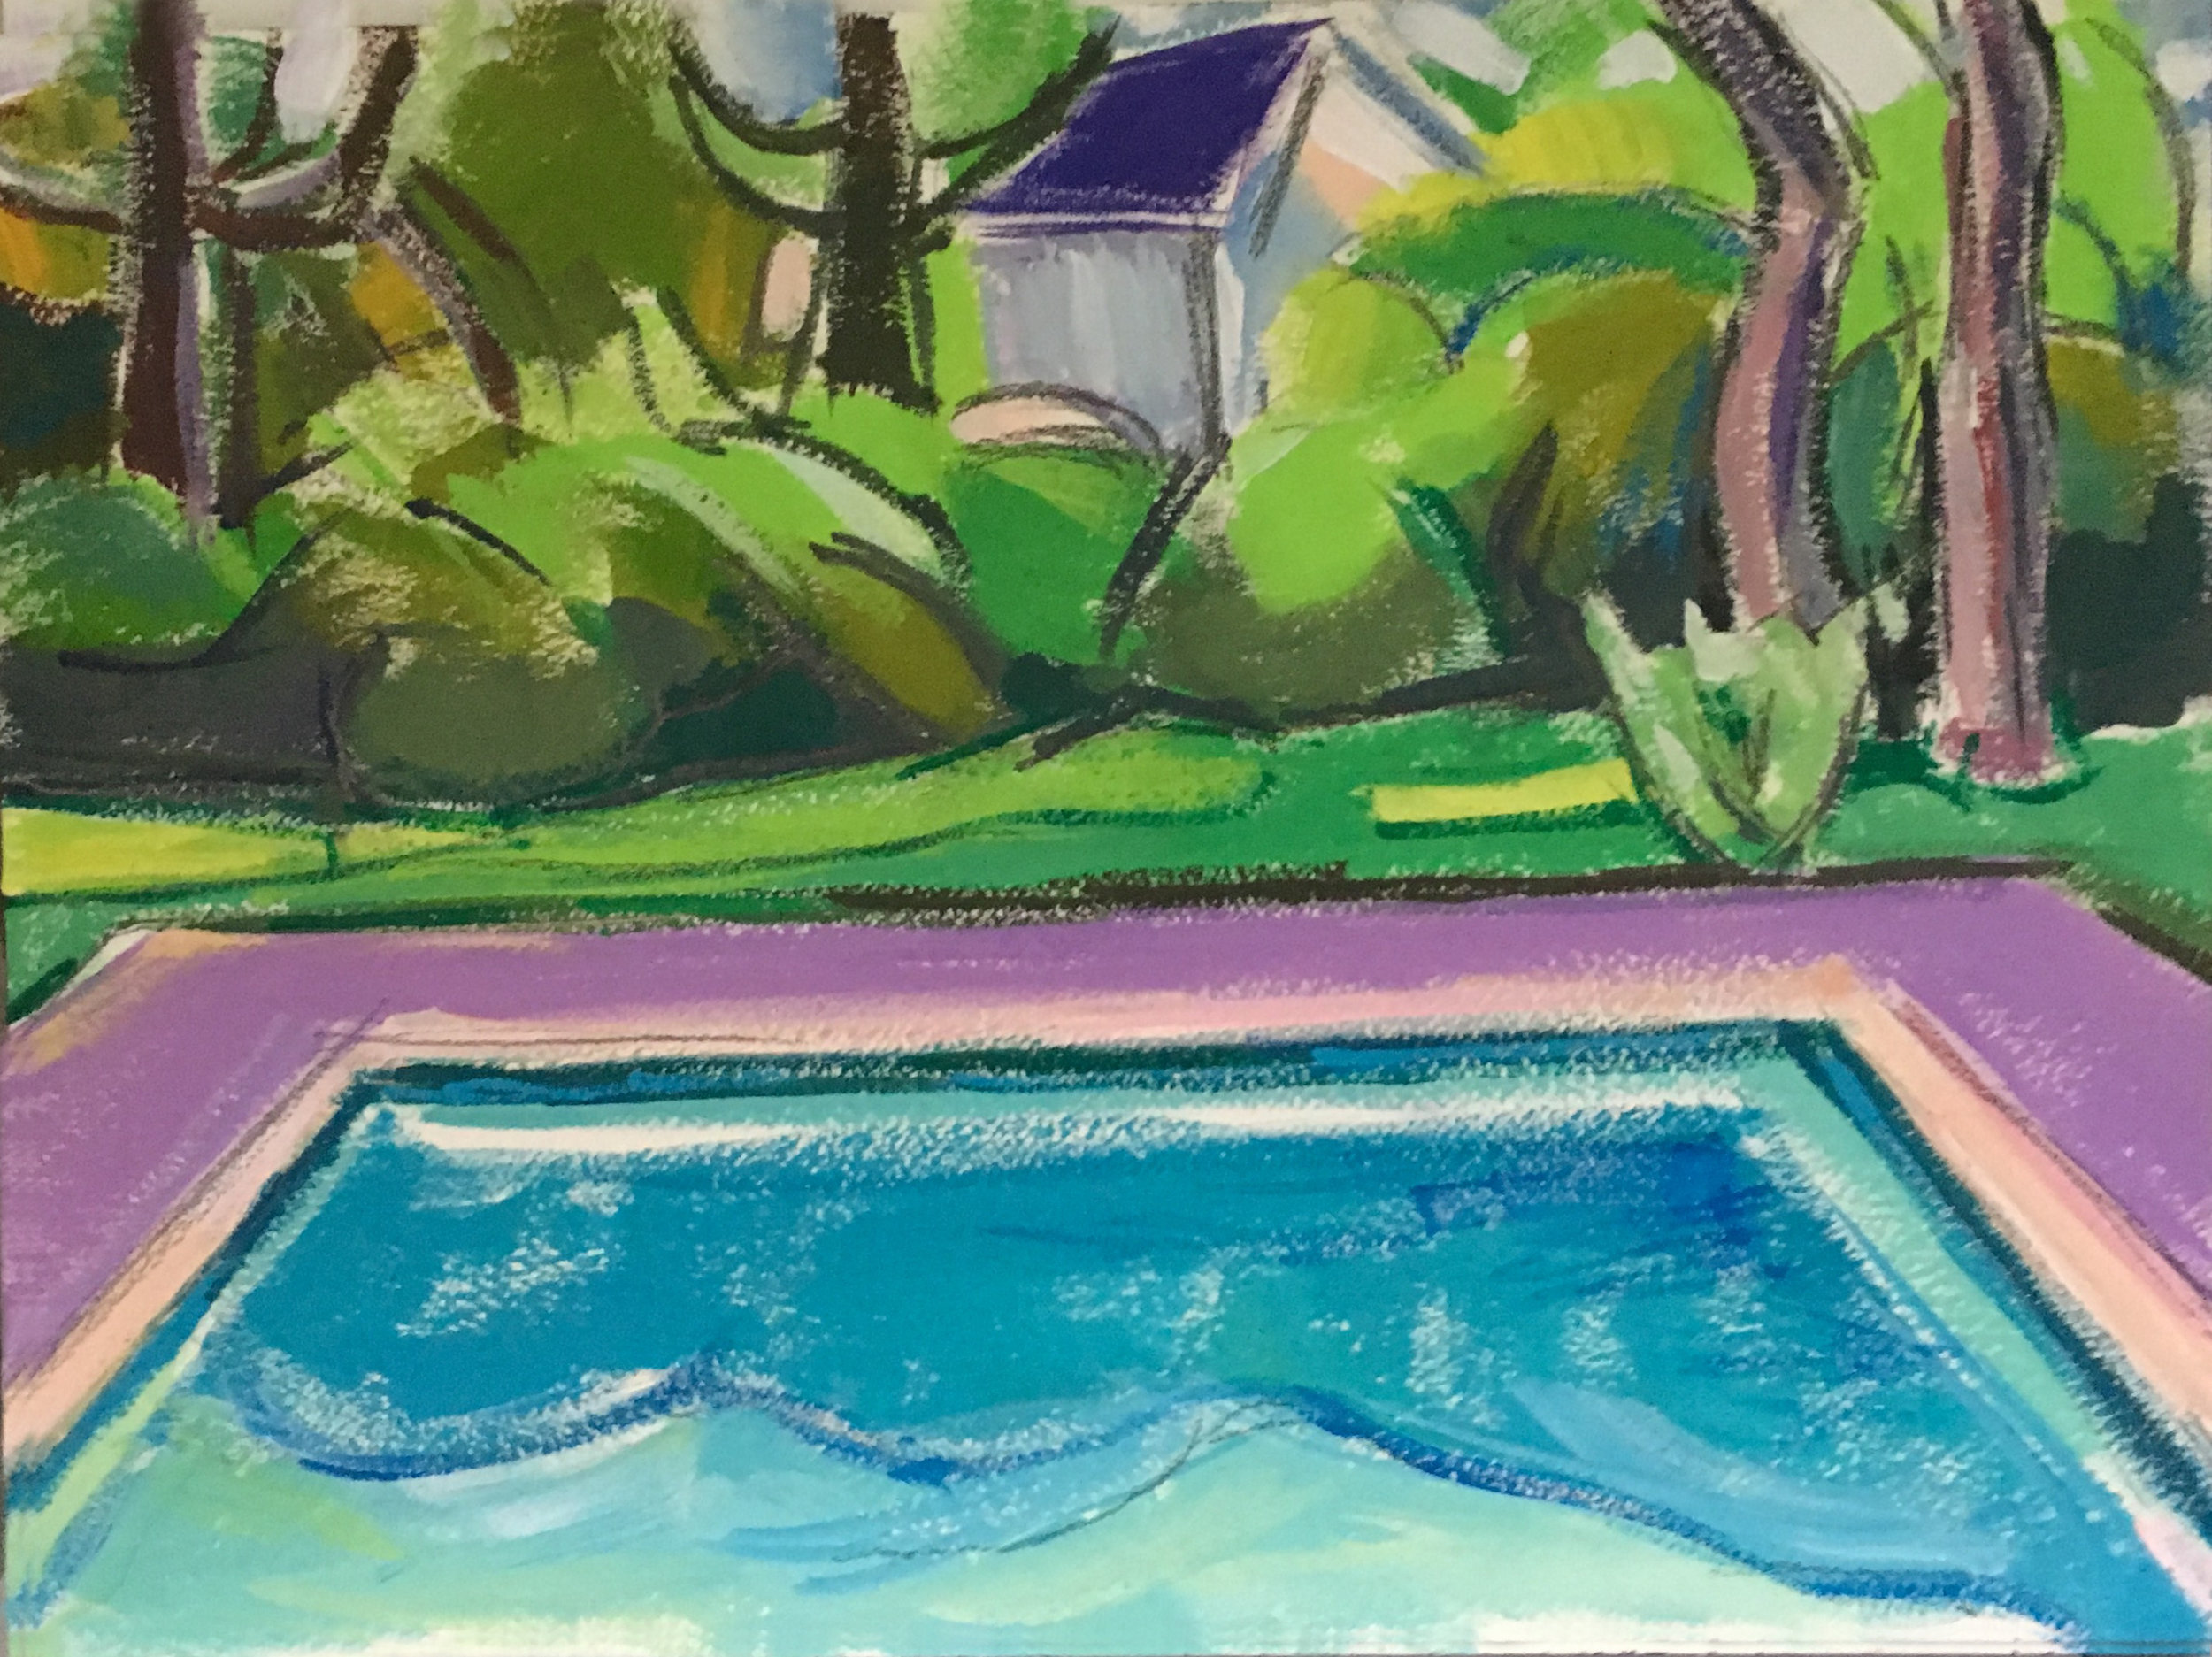    Pool Study II,   gouache, 9 x 12 in., 2017   